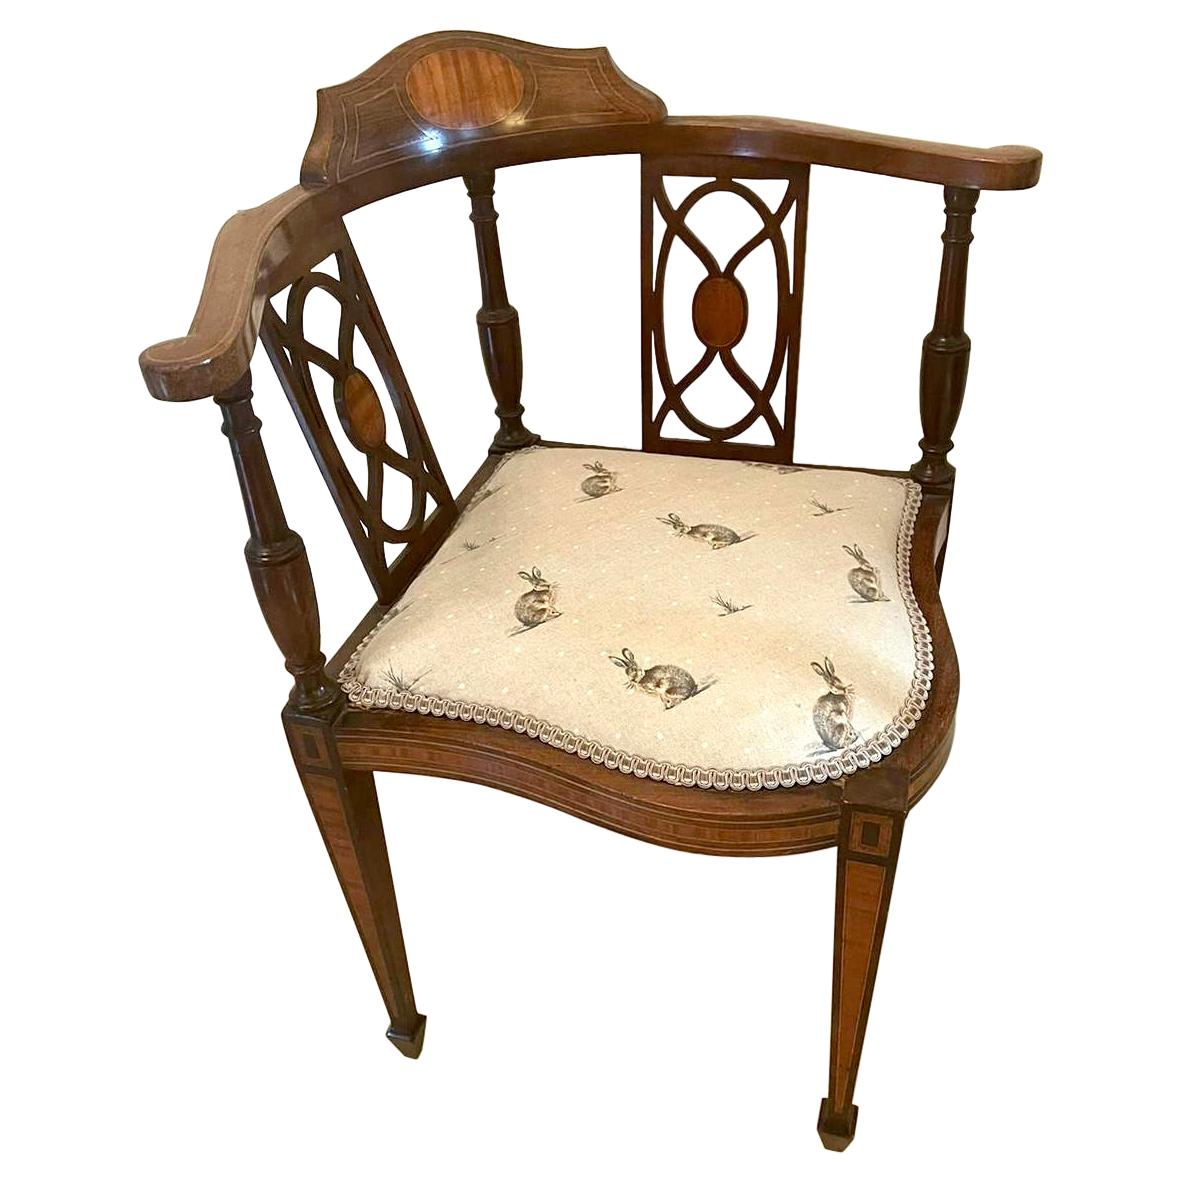 Antique Inlaid Mahogany Corner Chair